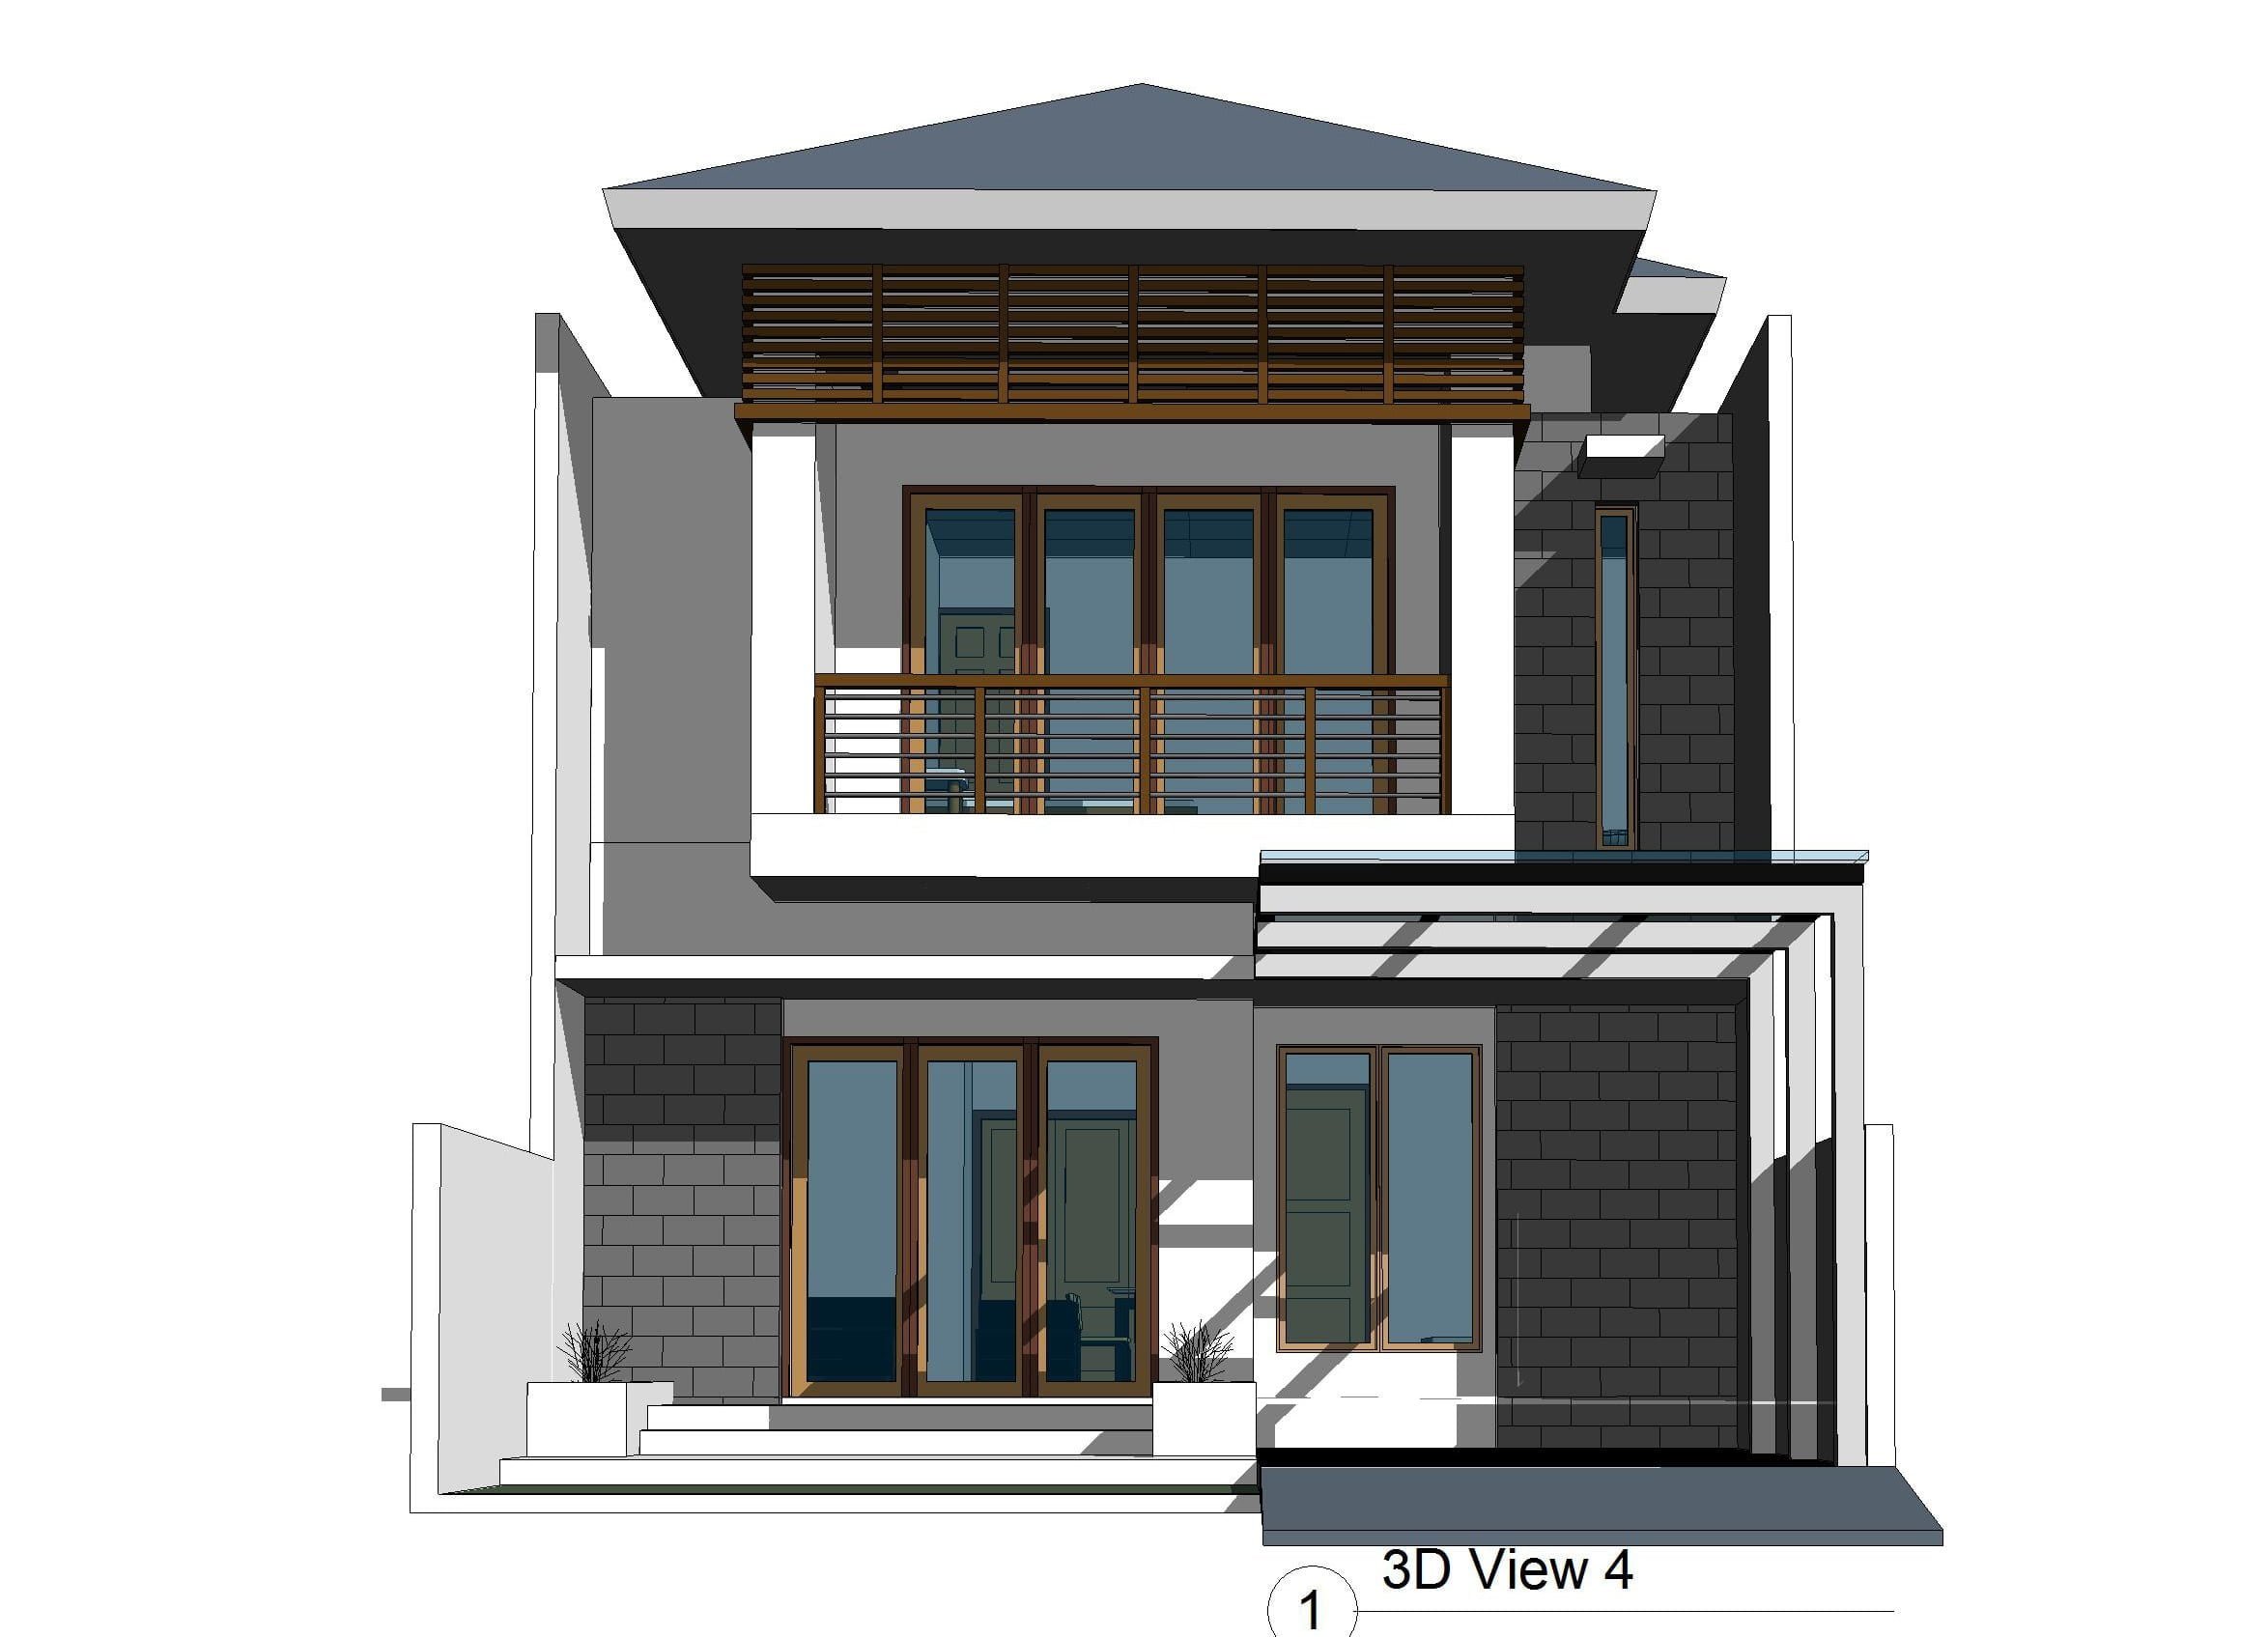 66 Contoh Desain Rumah Modern Minimalis 2 Lantai Luas Tanah 120M2 Paling Terkenal Deagam Design